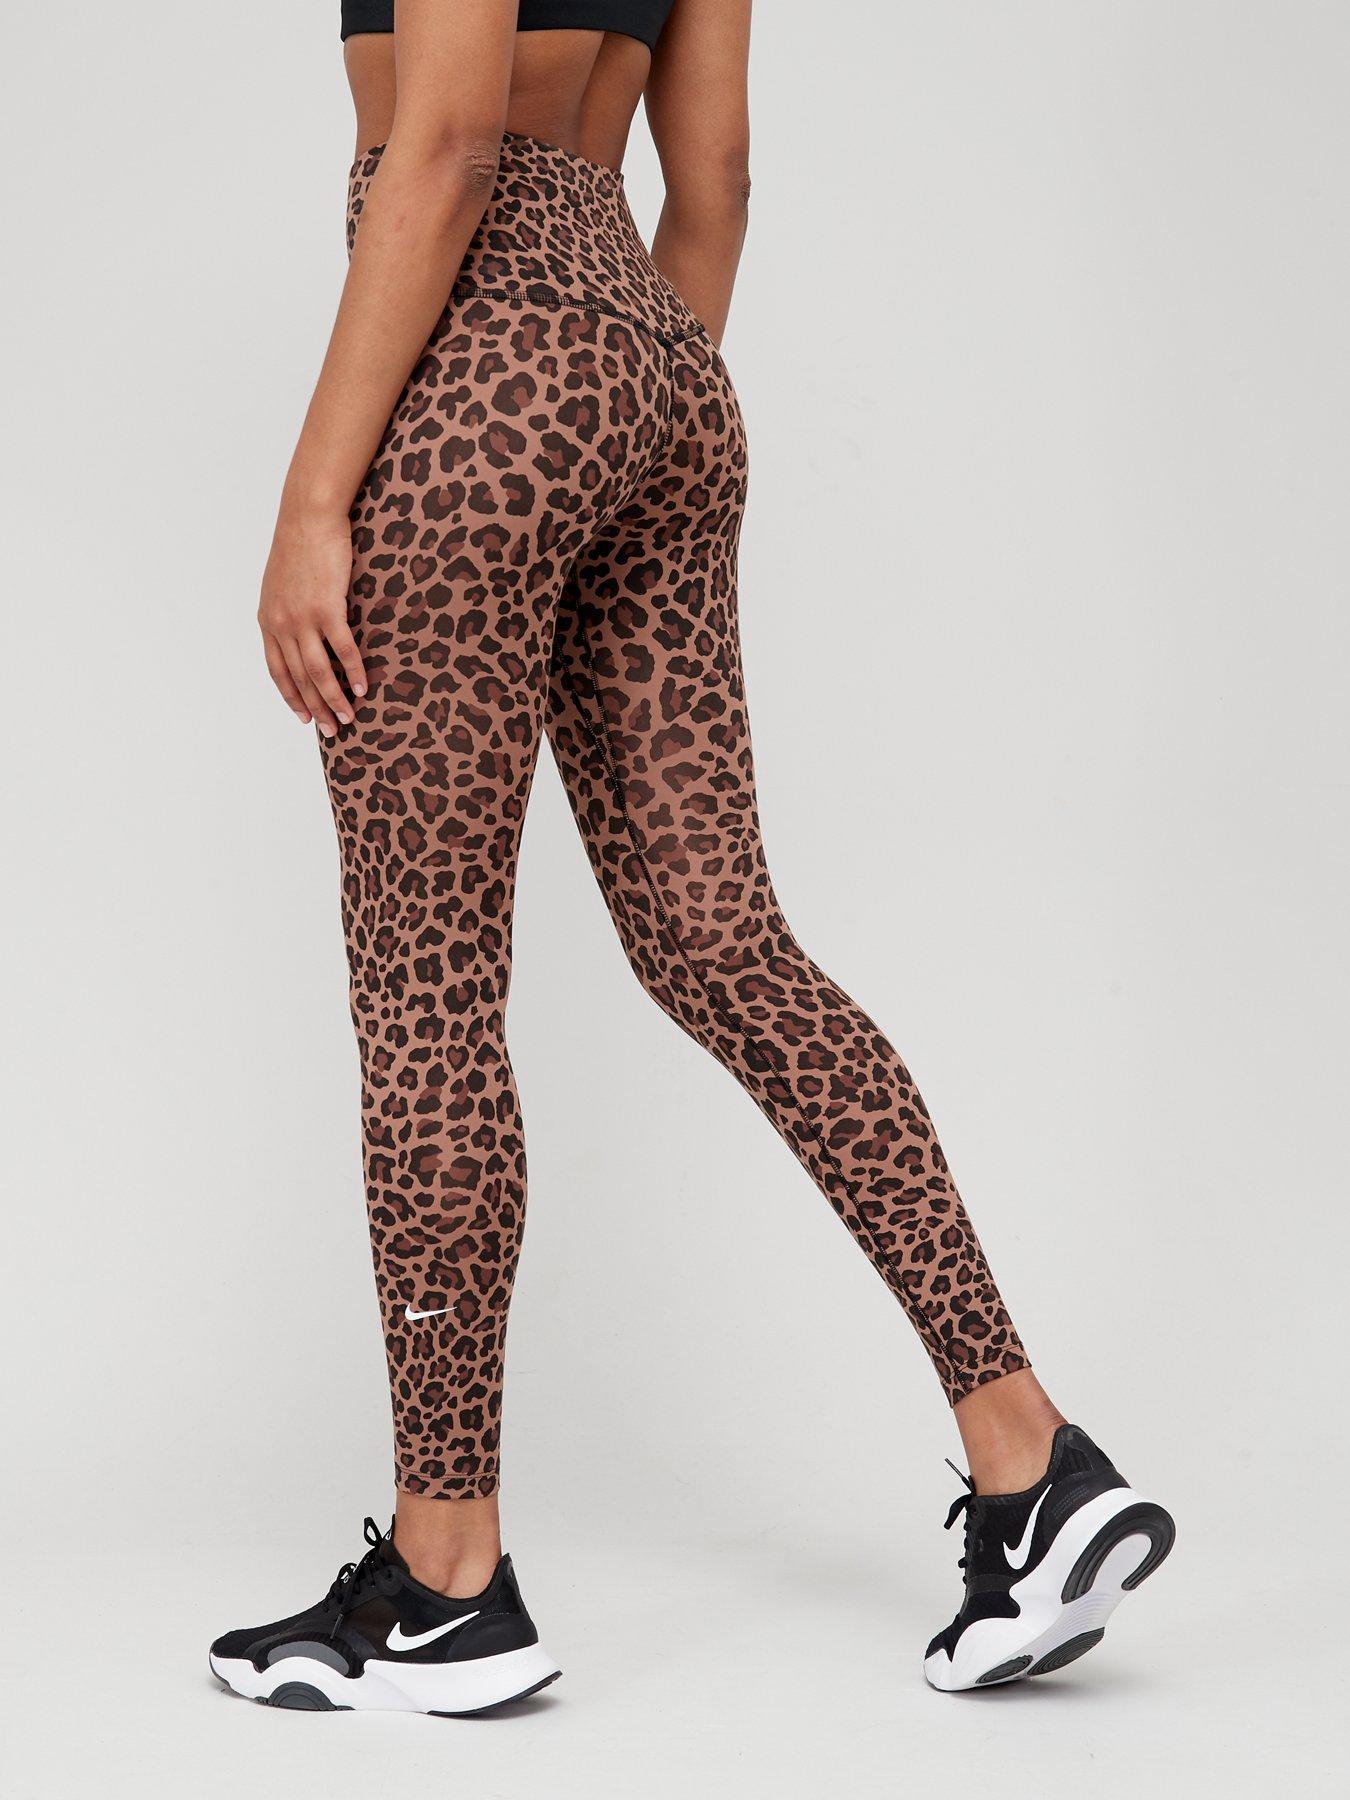 New Mix, Pants & Jumpsuits, New Mix Leopard Print High Waist Leggings